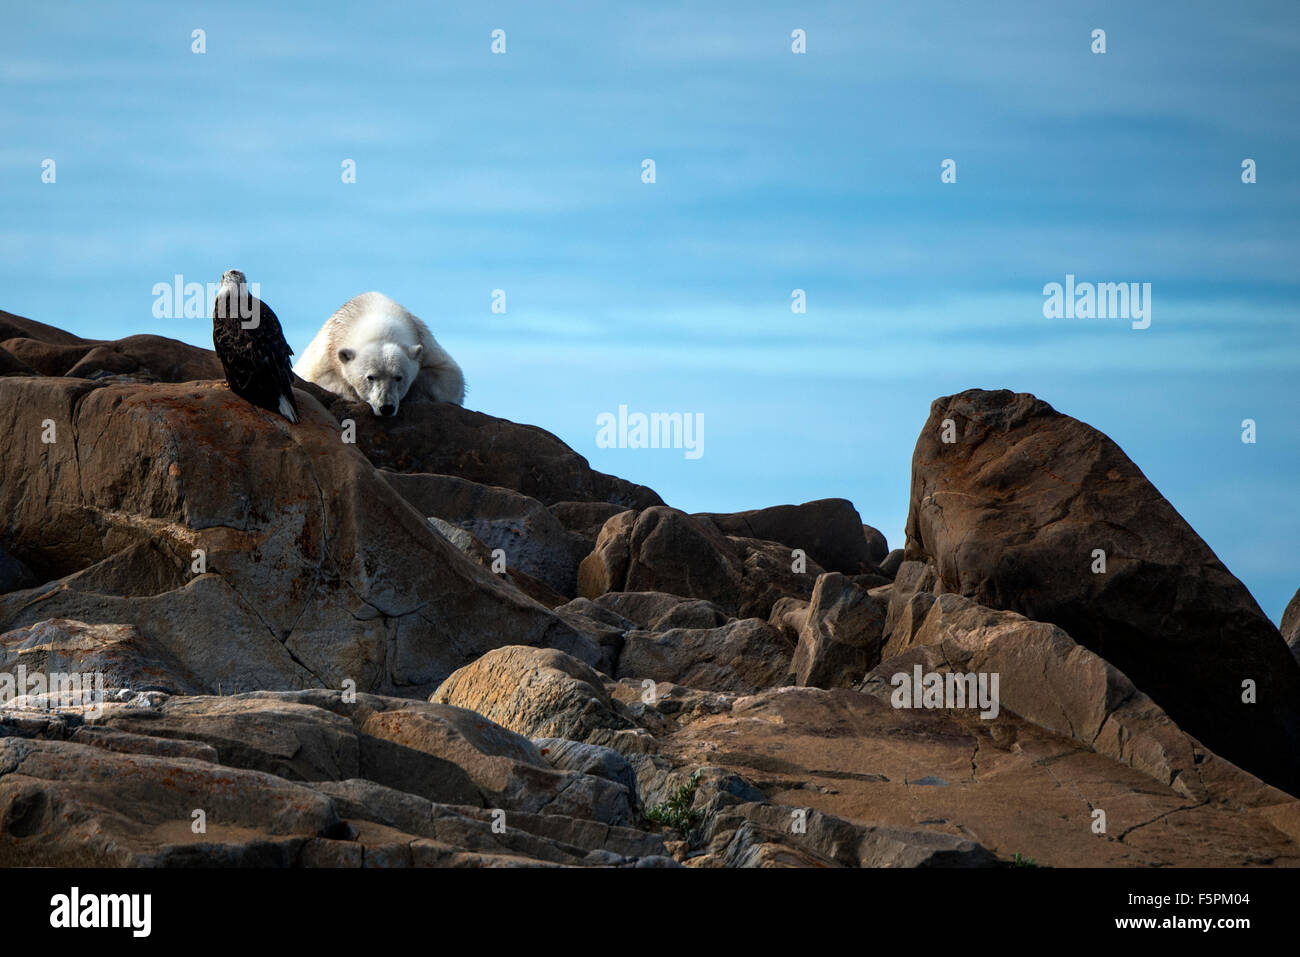 Polar Bear adult (Ursus maritimus) lying on rocks with Bald Eagle (Haliaeetus leucocephalus) Churchill, Manitoba, Canada Stock Photo